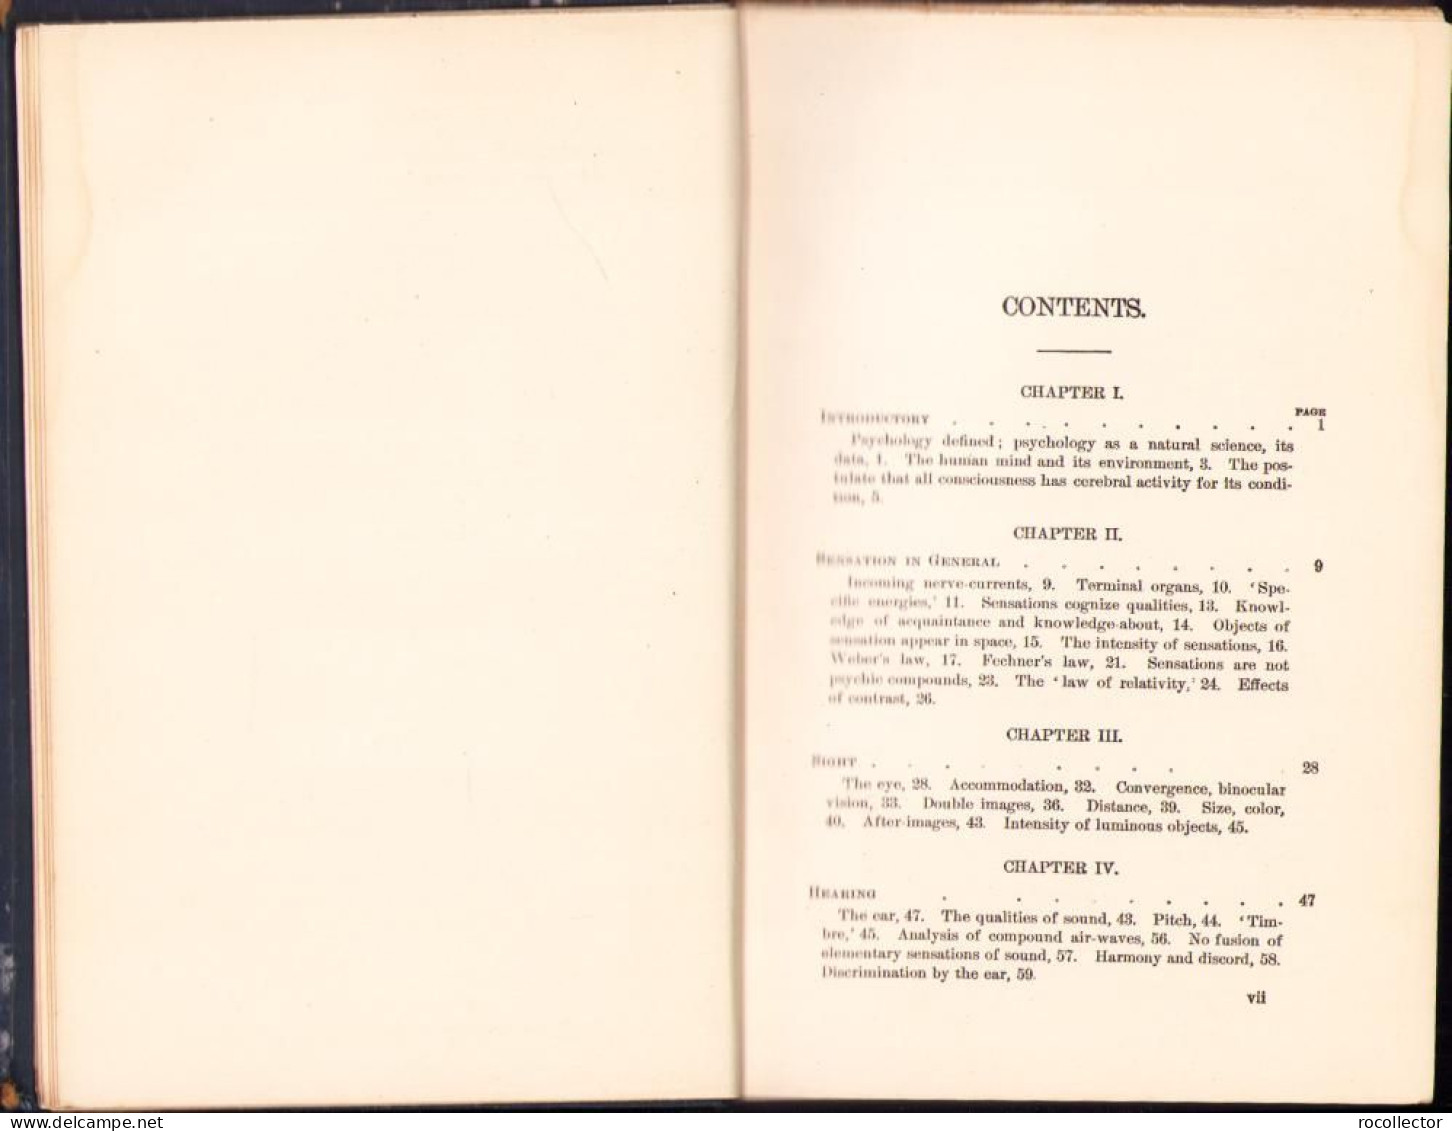 Text Book Of Psychology By William James, 1892, London C1651 - Alte Bücher